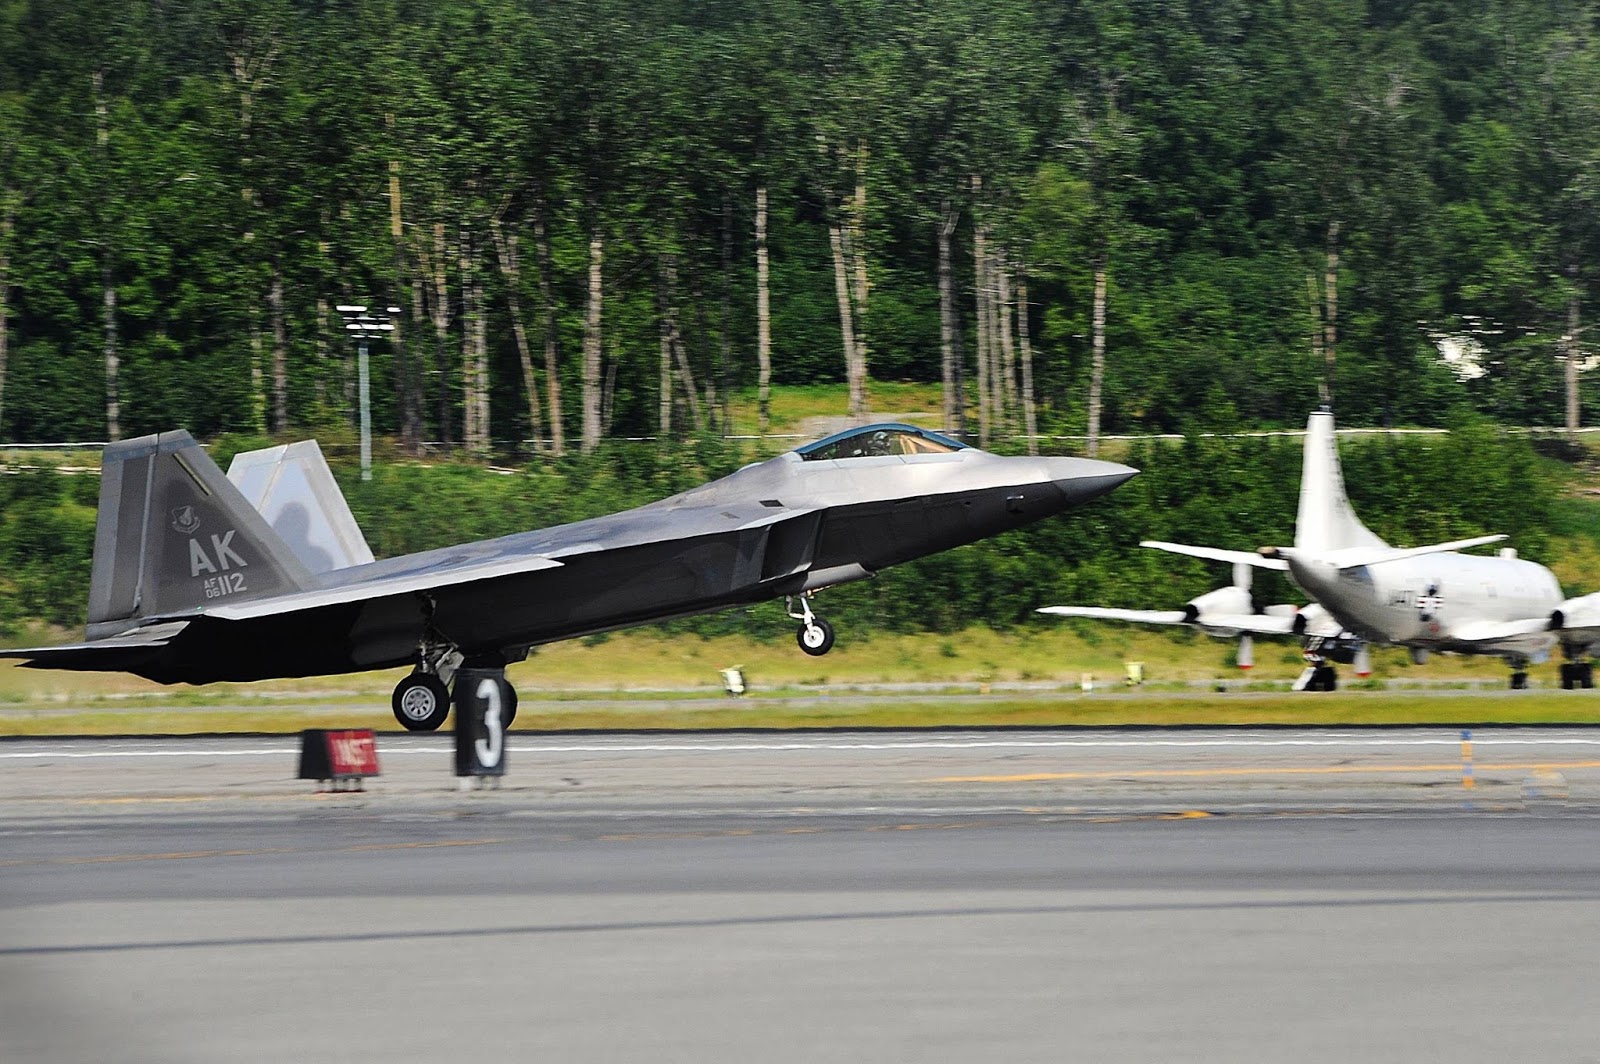 File:F-22 Raptor shows its weapon bay.jpg - Wikipedia